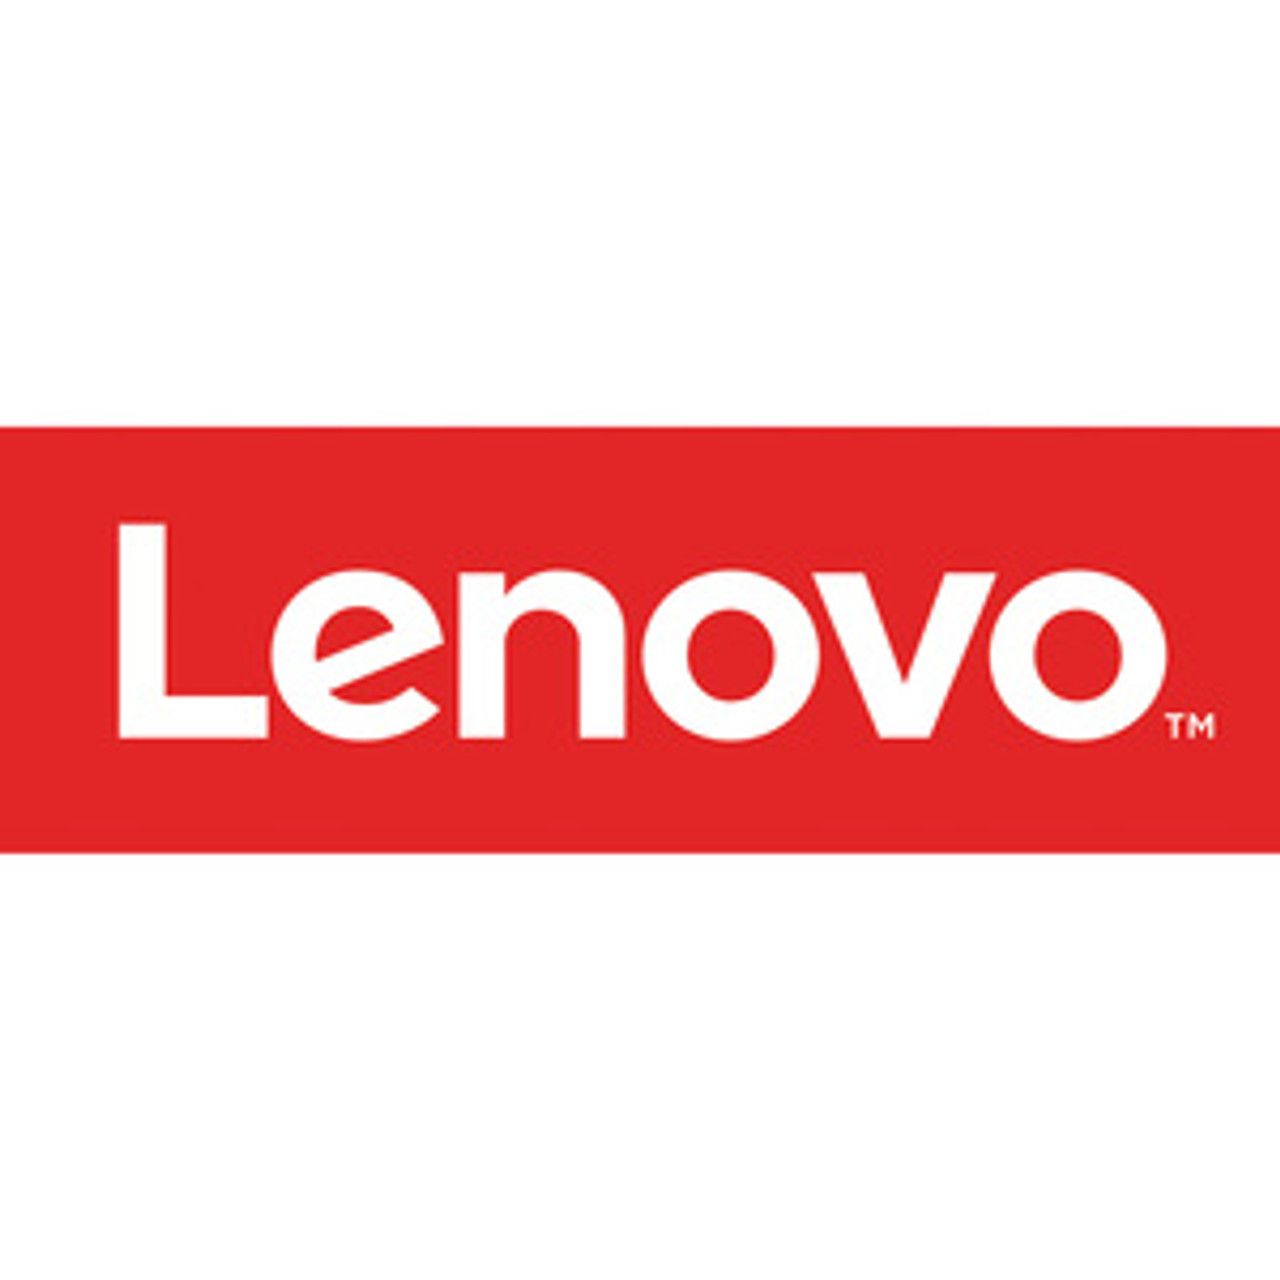 Lenovo 93072RX